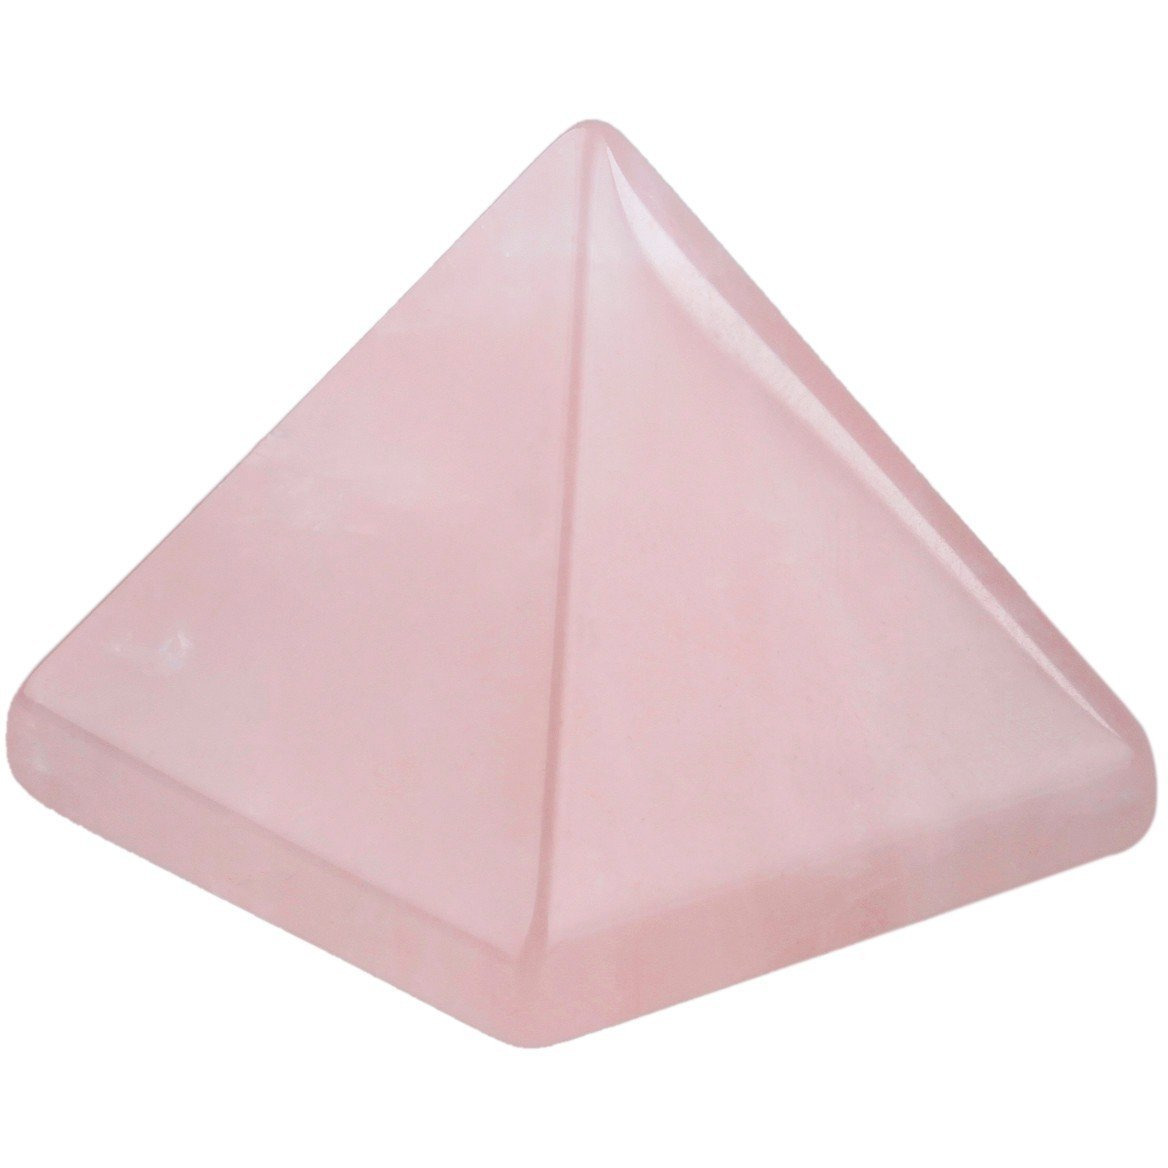 Winmaarc Healing Crystal Rose Quartz Pyramid Metaphysical Natural Gemstone Figurine